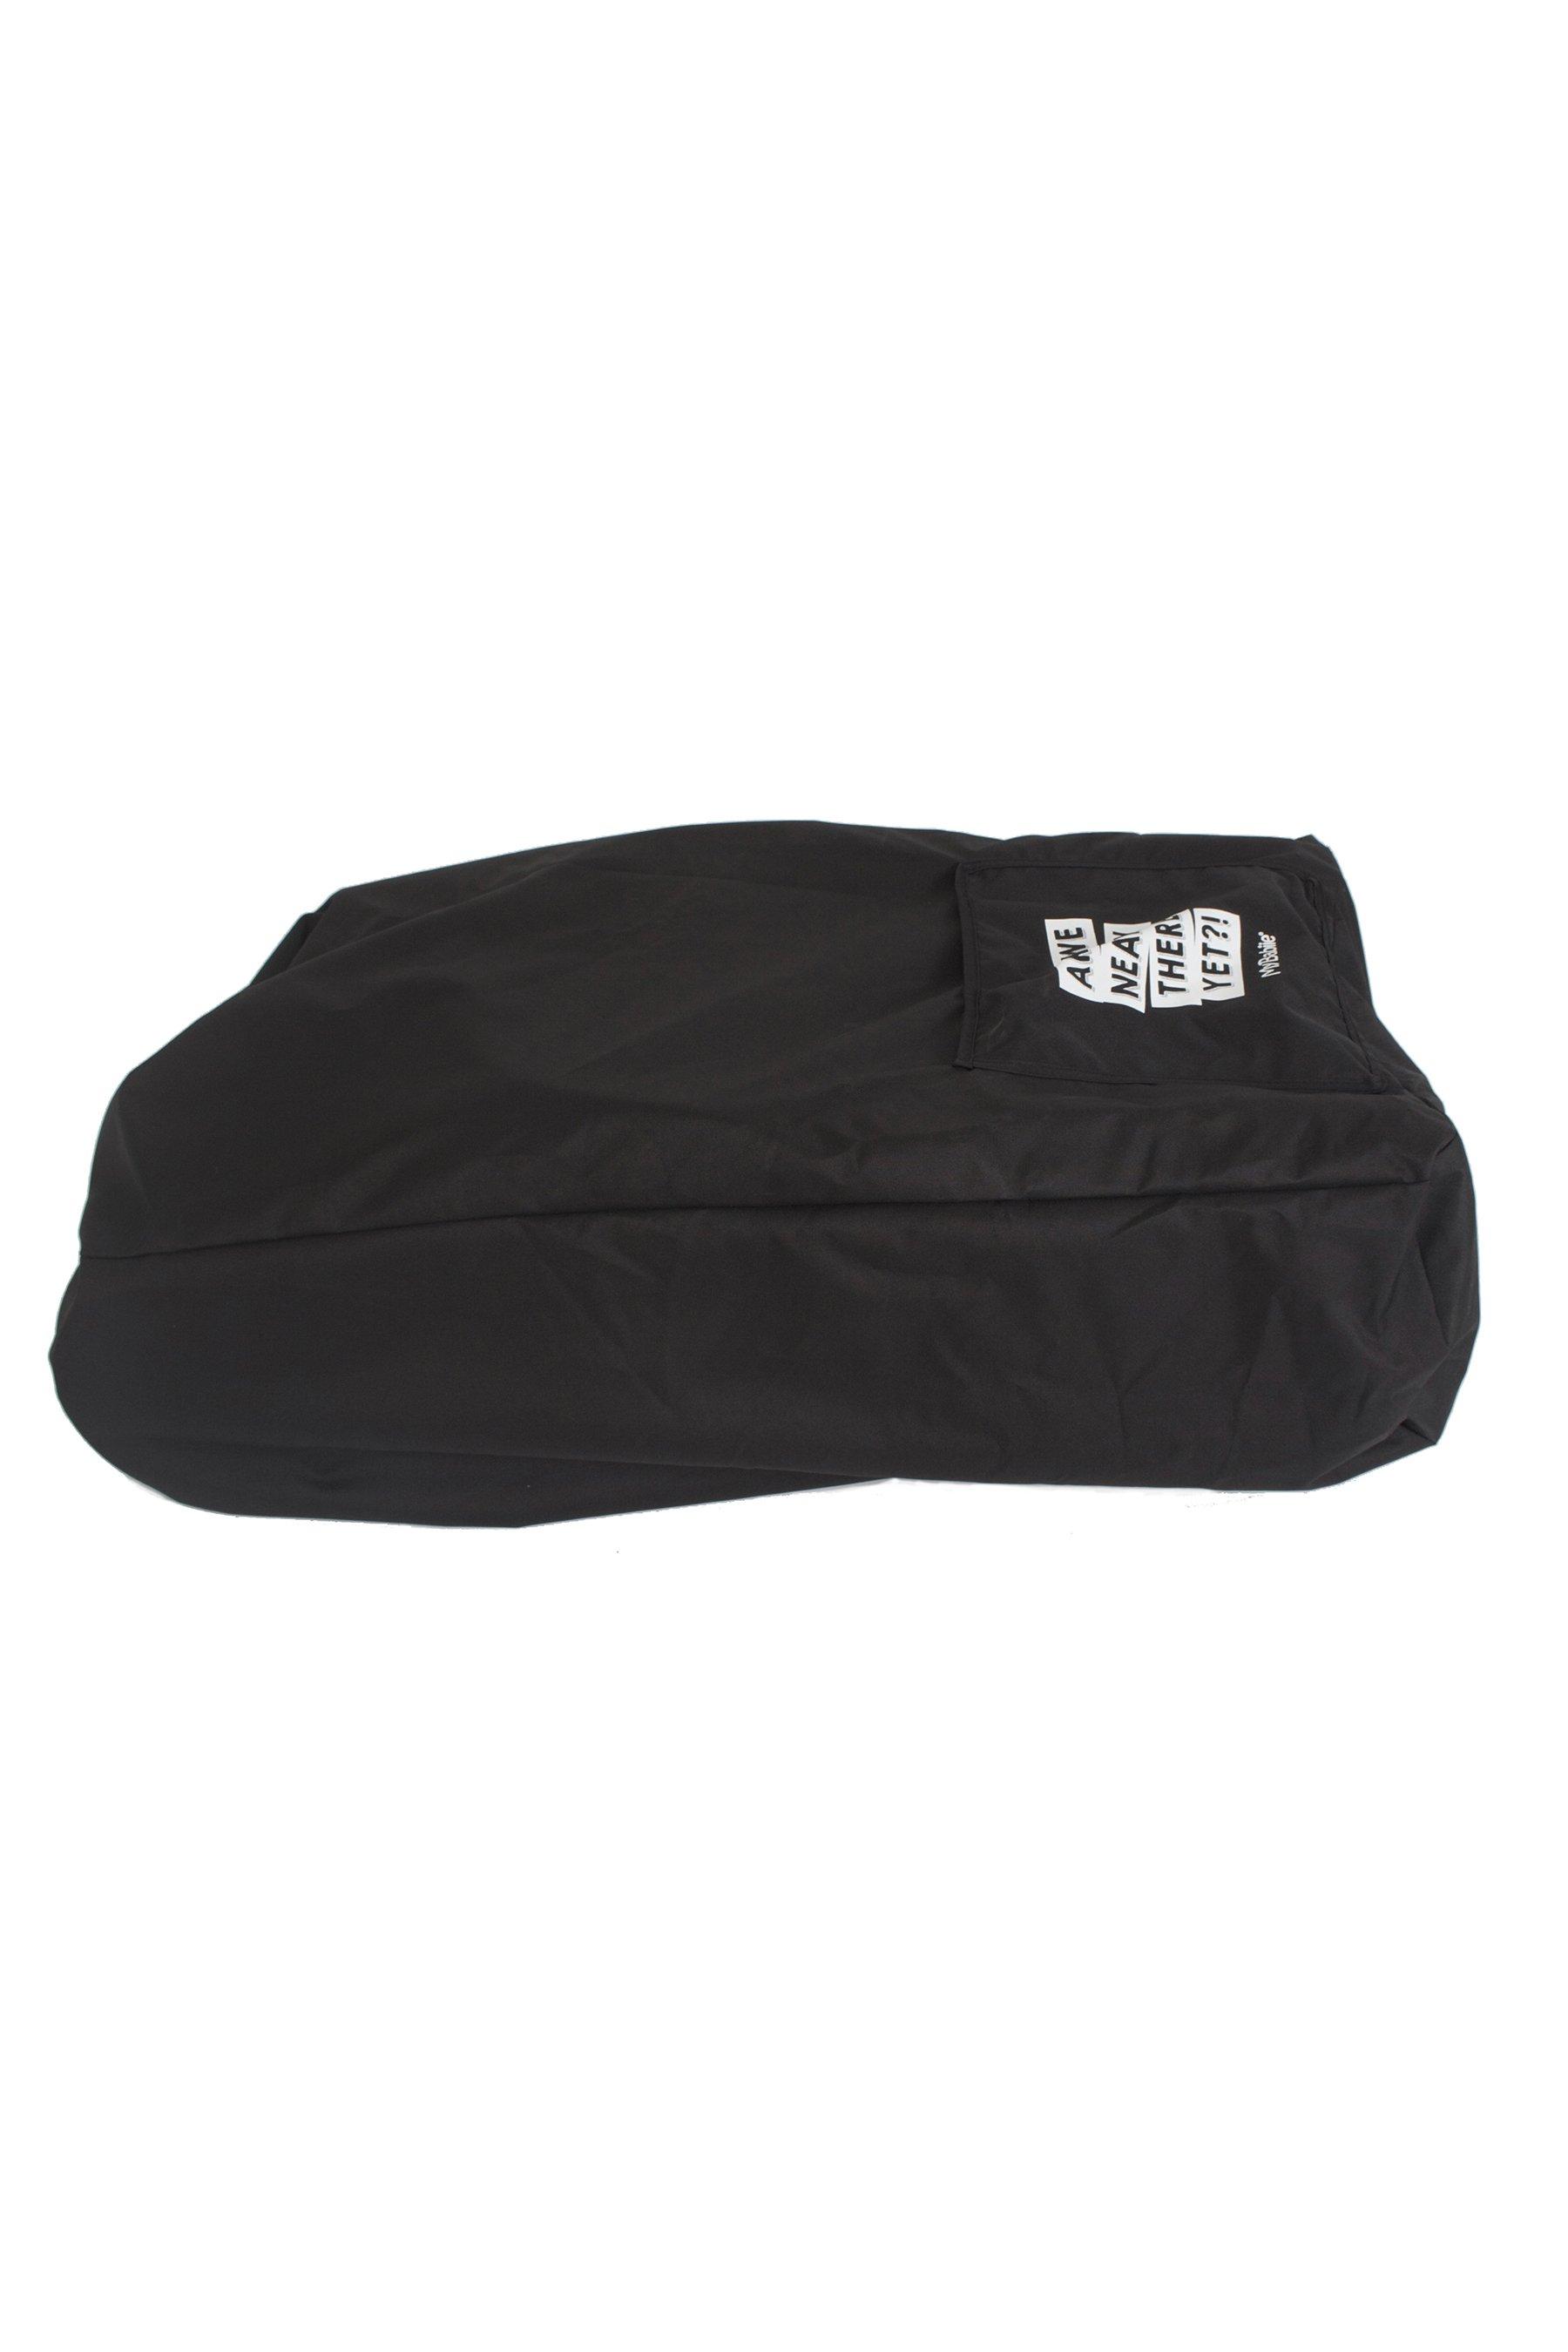 My Babiie Pushchair Travel Storage Bag – Black – Fabric